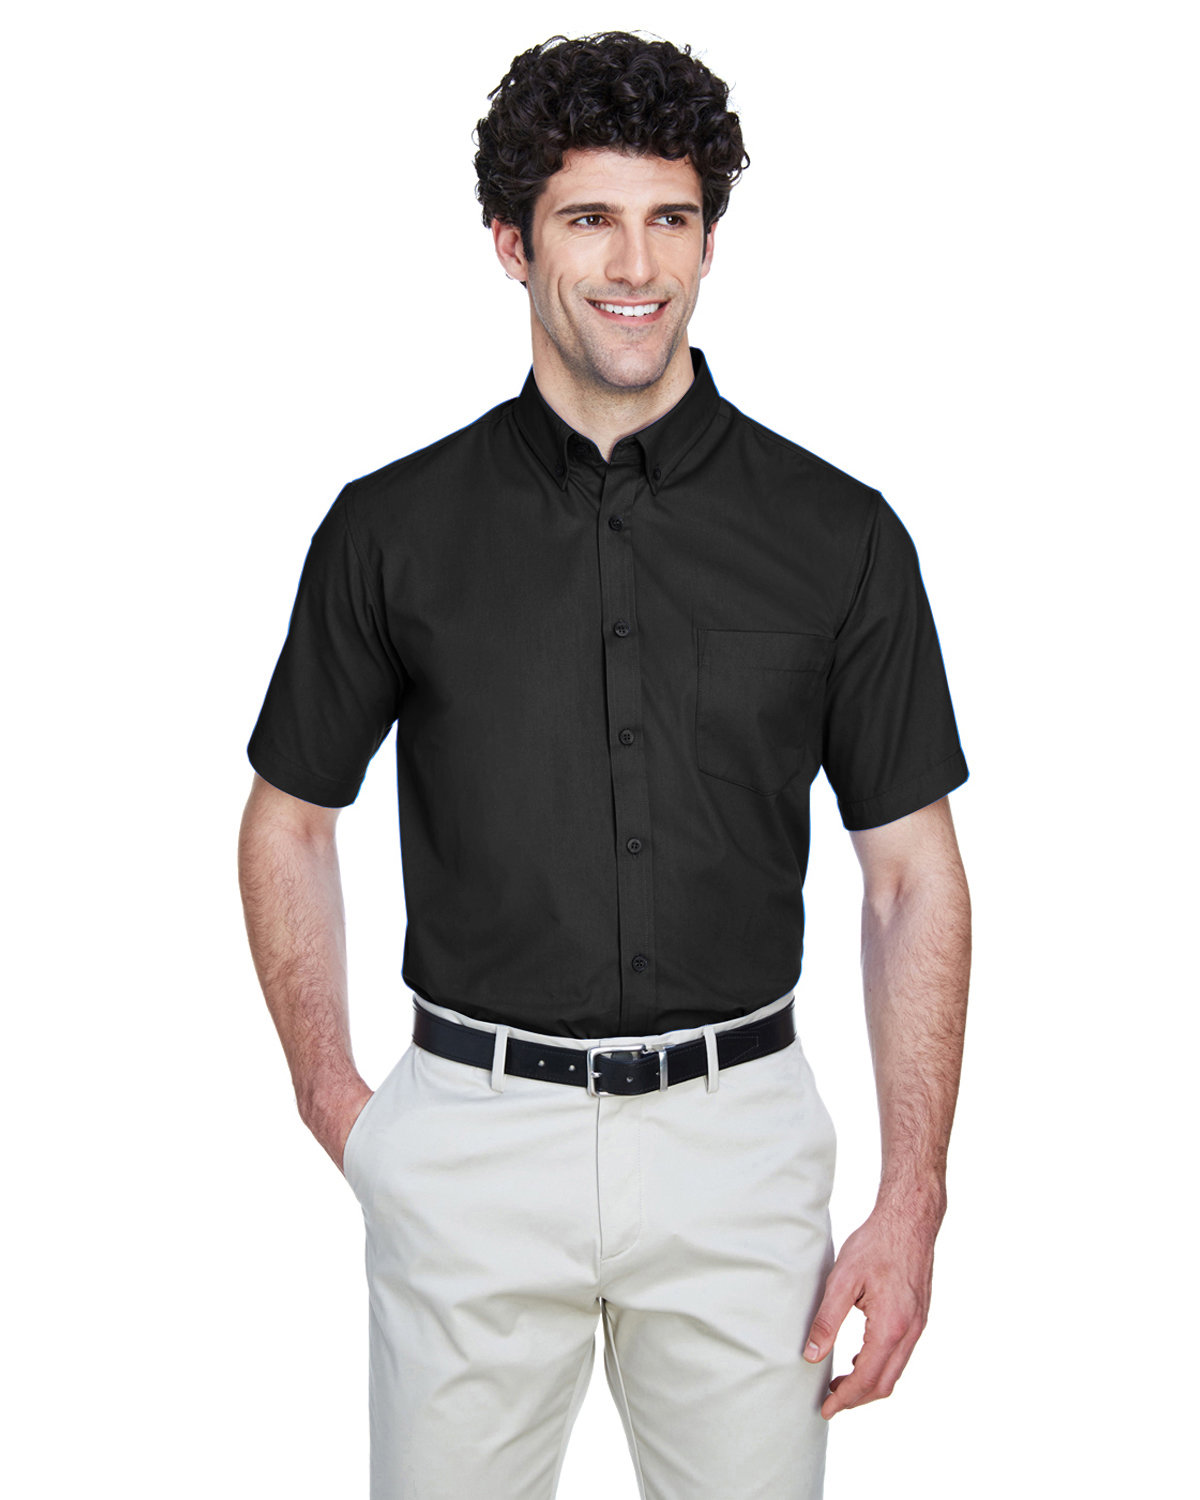 Core 365 88194T - Men's Tall Optimum Short Sleeve Twill Shirt